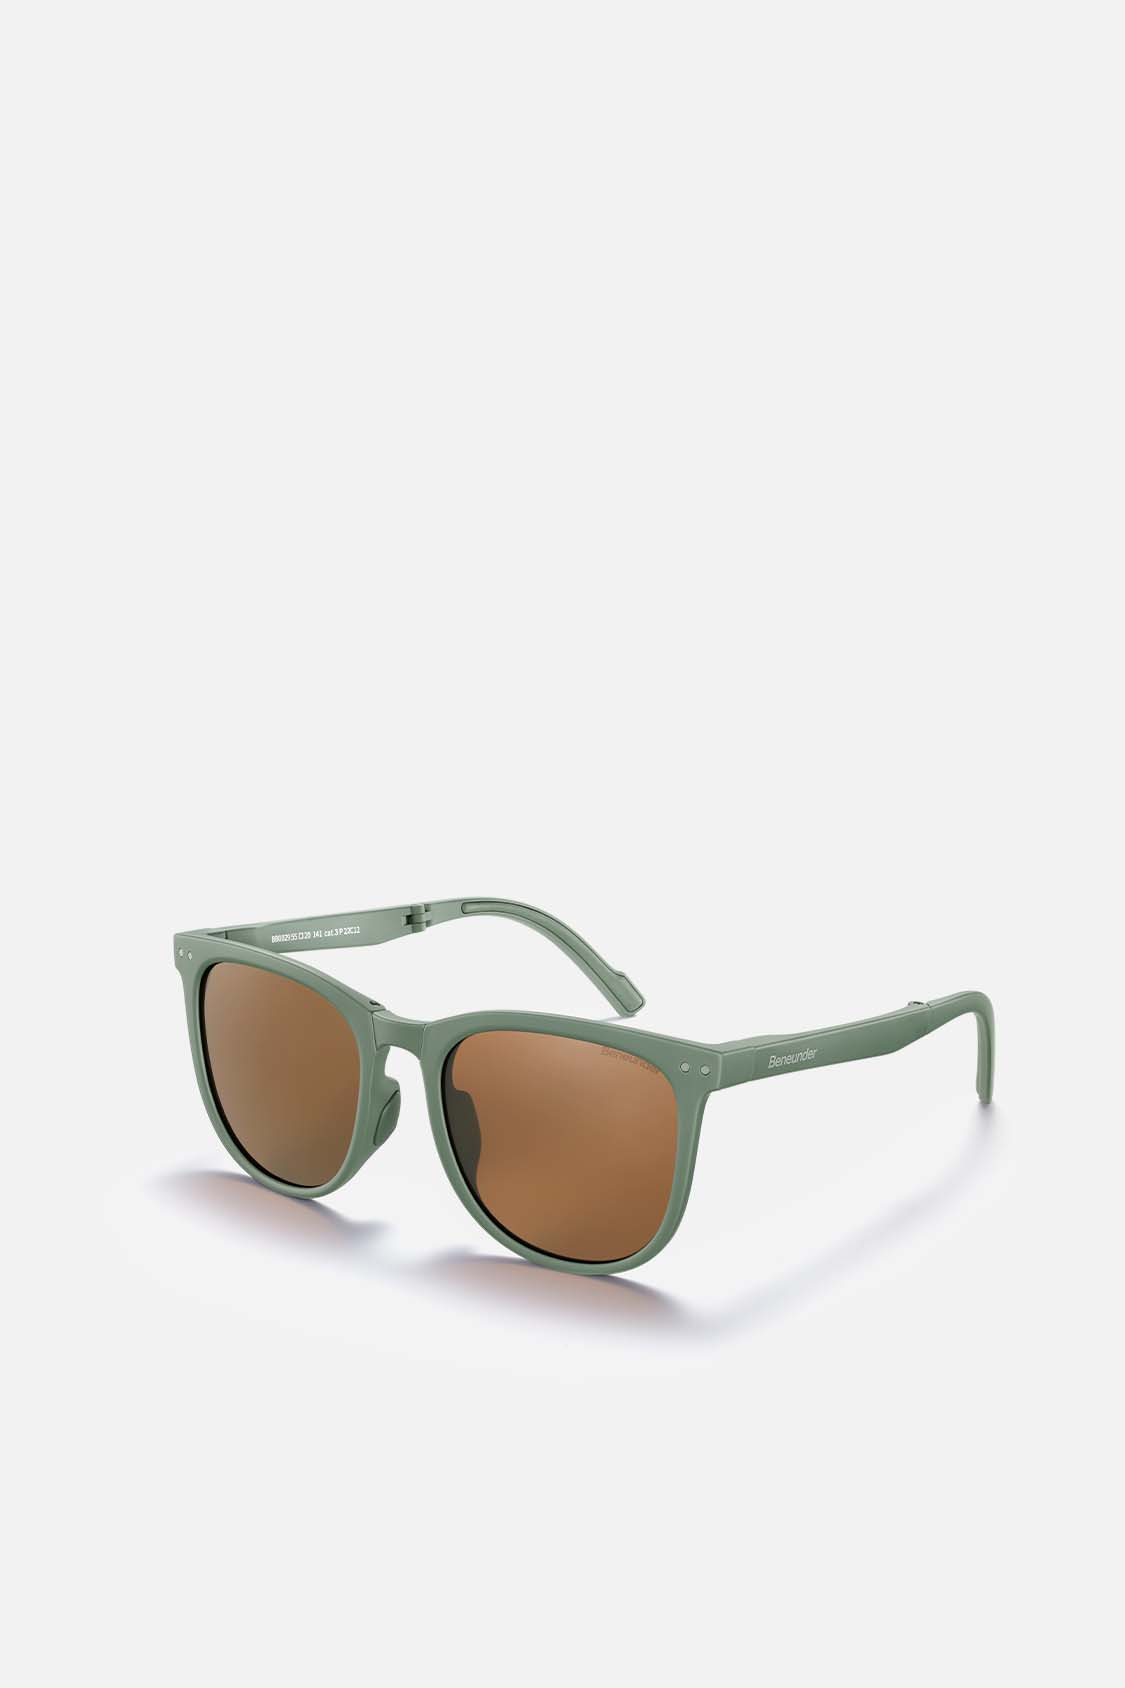 Beneunder Sunglasses and Sunhat Review